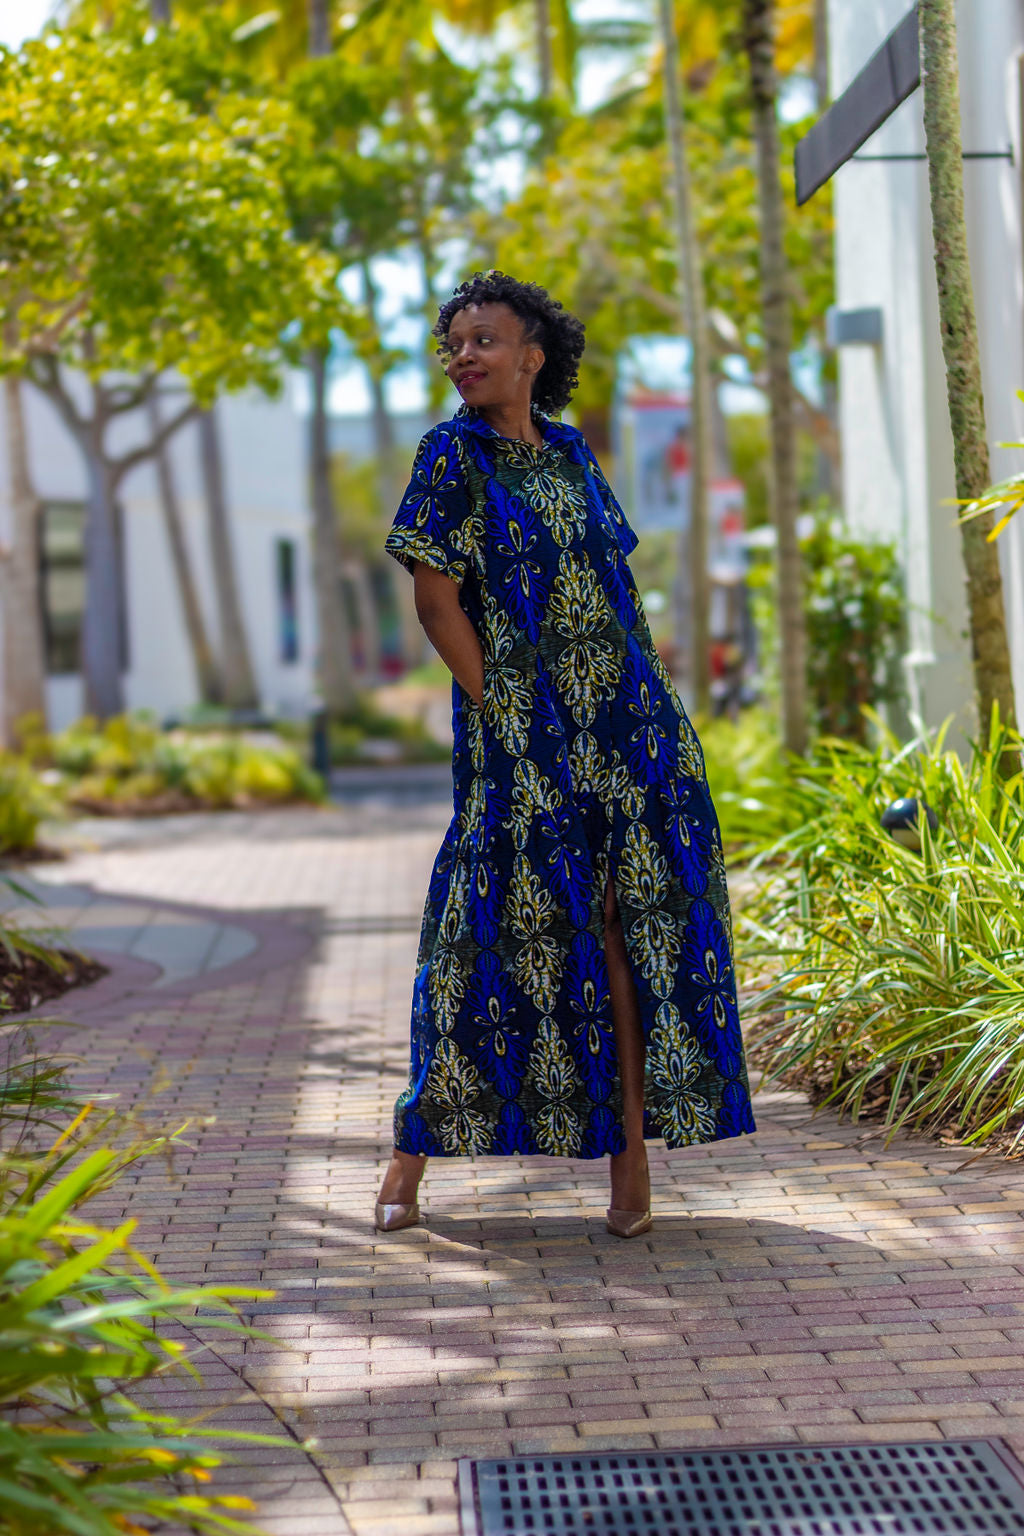 African Print /Ankara/Kitenge Maxi Dress - Royal Blue /Olive Green/Black Floral Print Short Sleeved Button Down Long Shirt Dress